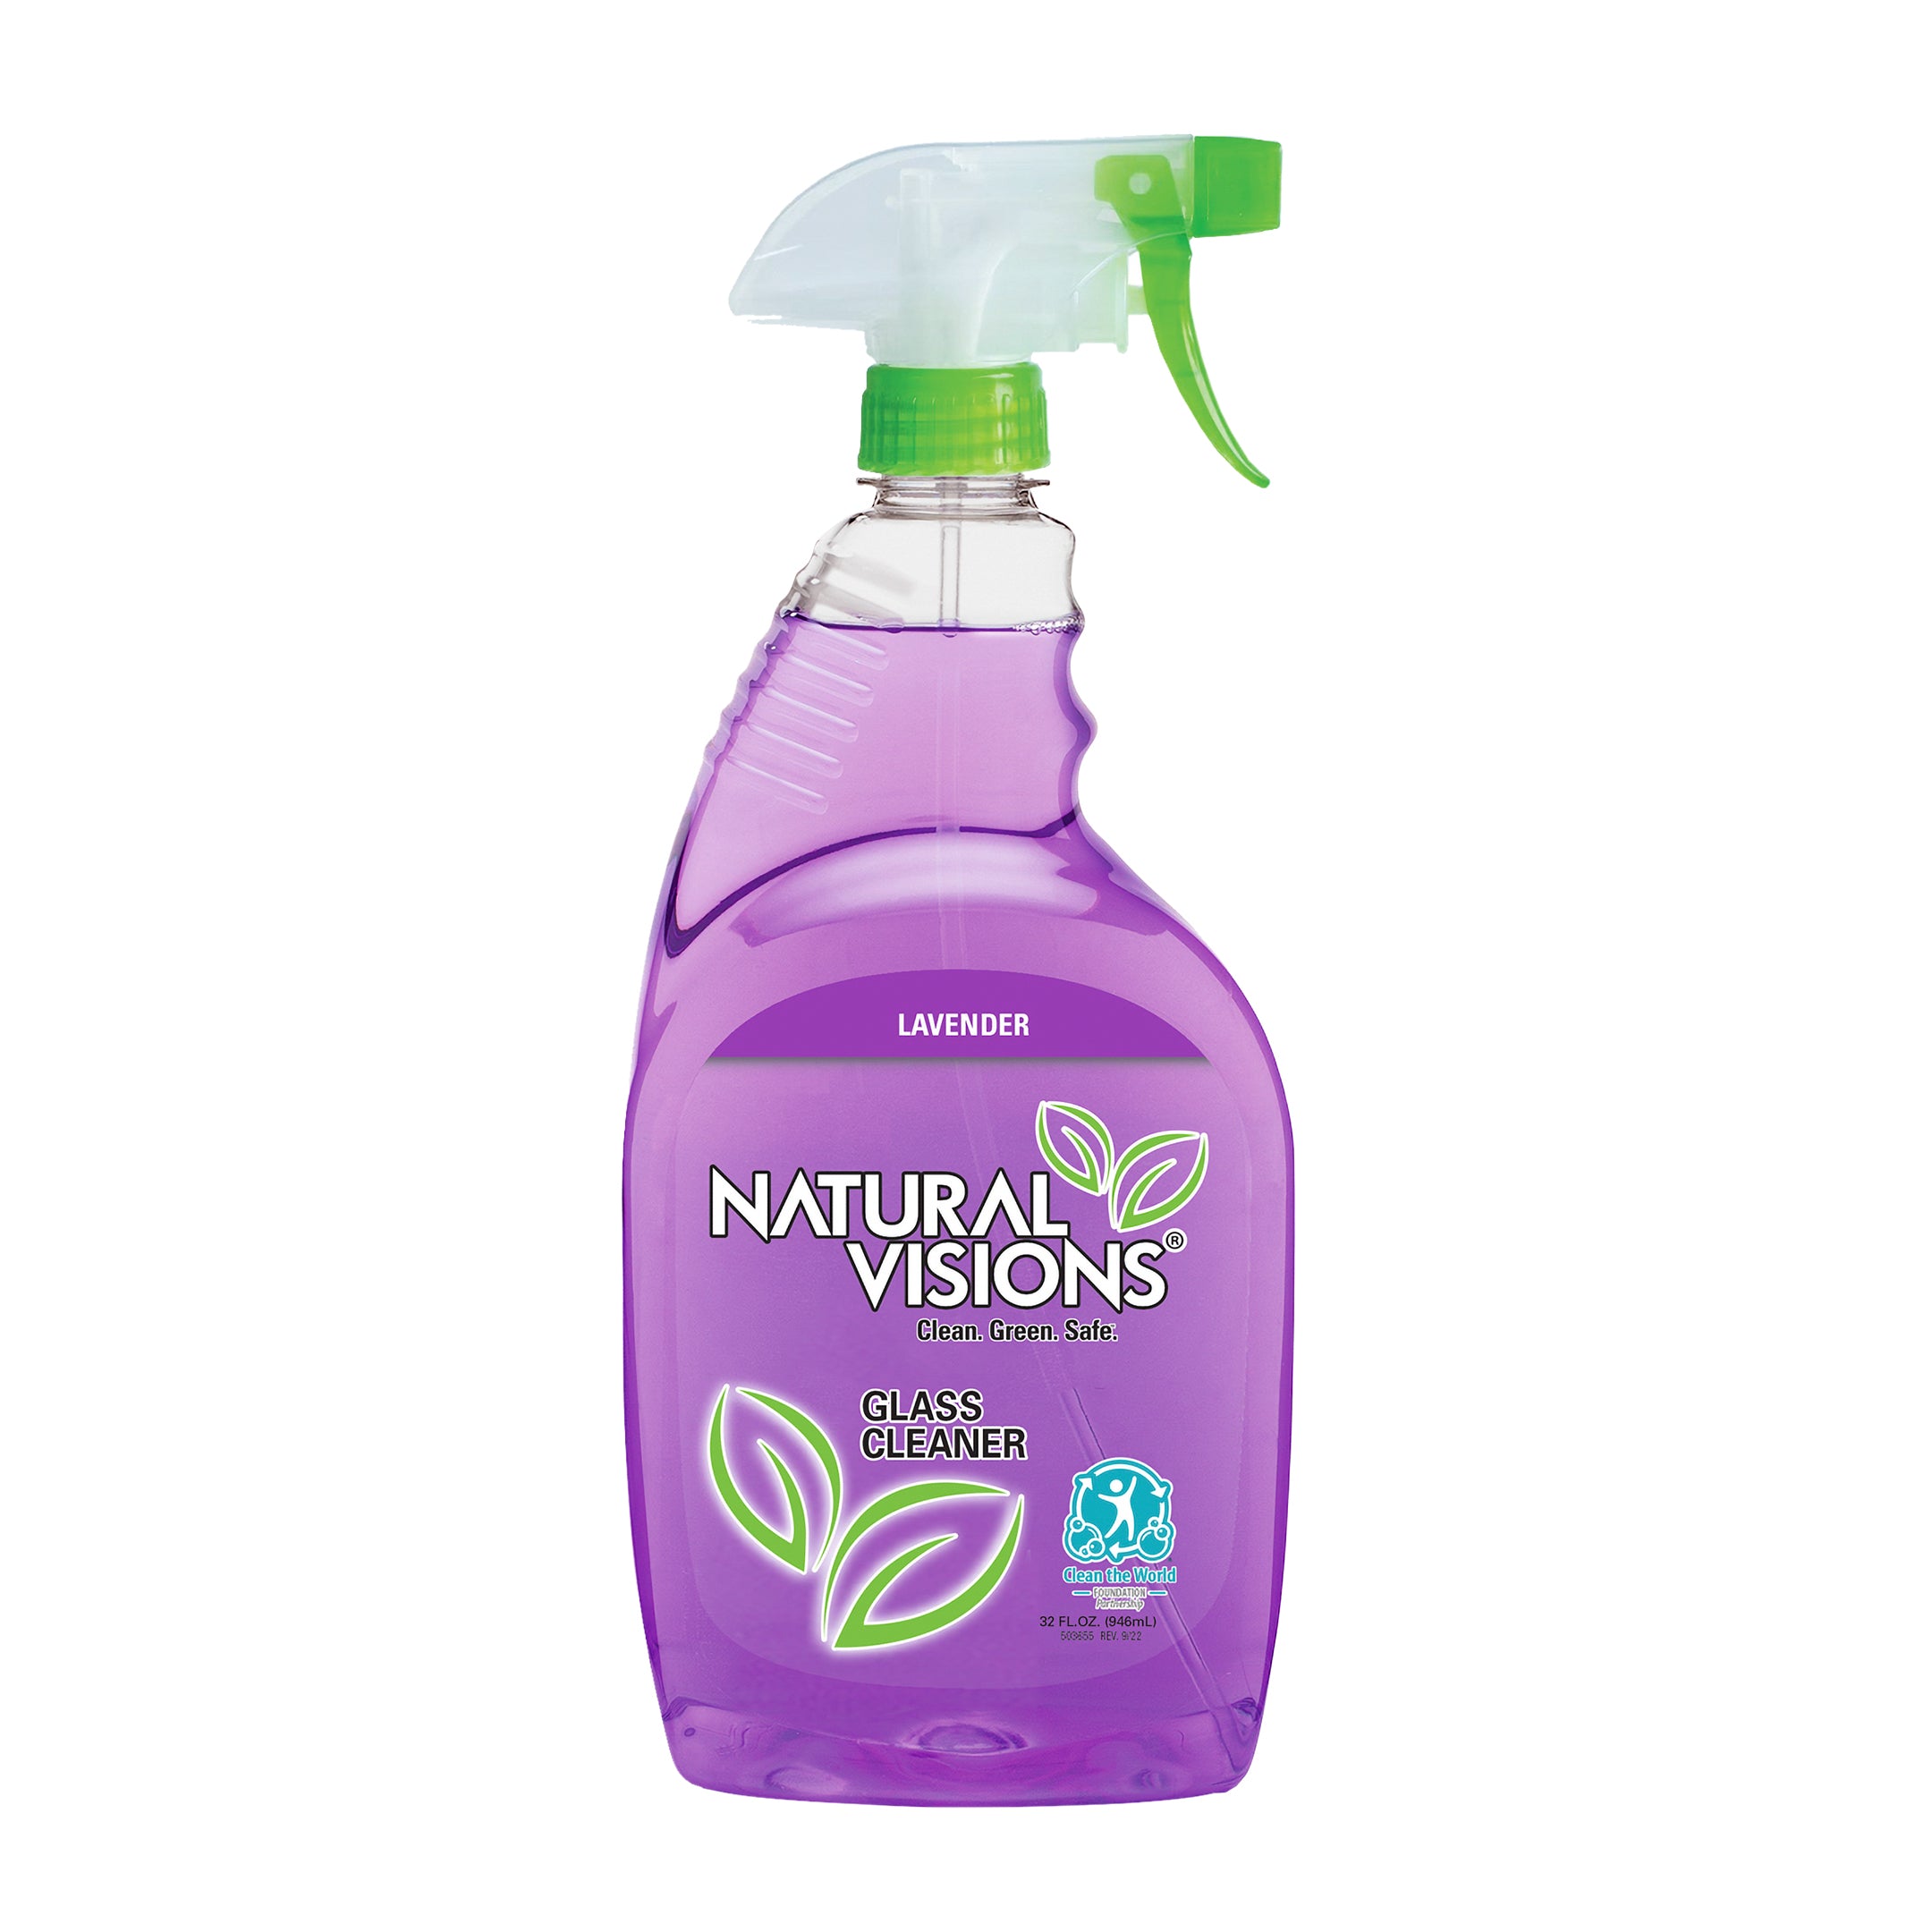 Natural Visions Lavender Glass Cleaner - 32oz/6pk